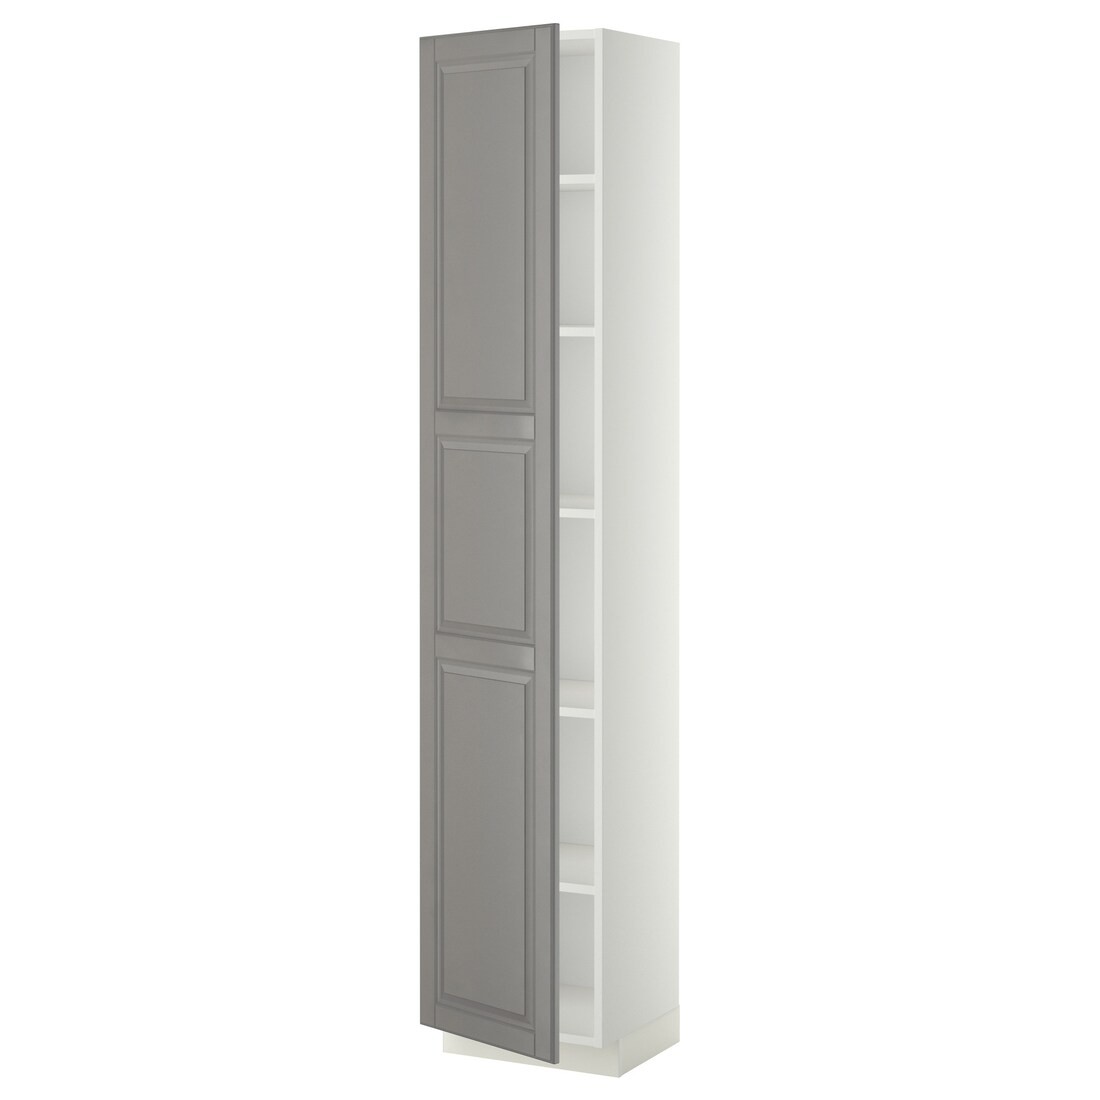 METOD МЕТОД Высокий шкаф с полками, белый / Bodbyn серый, 40x37x200 см